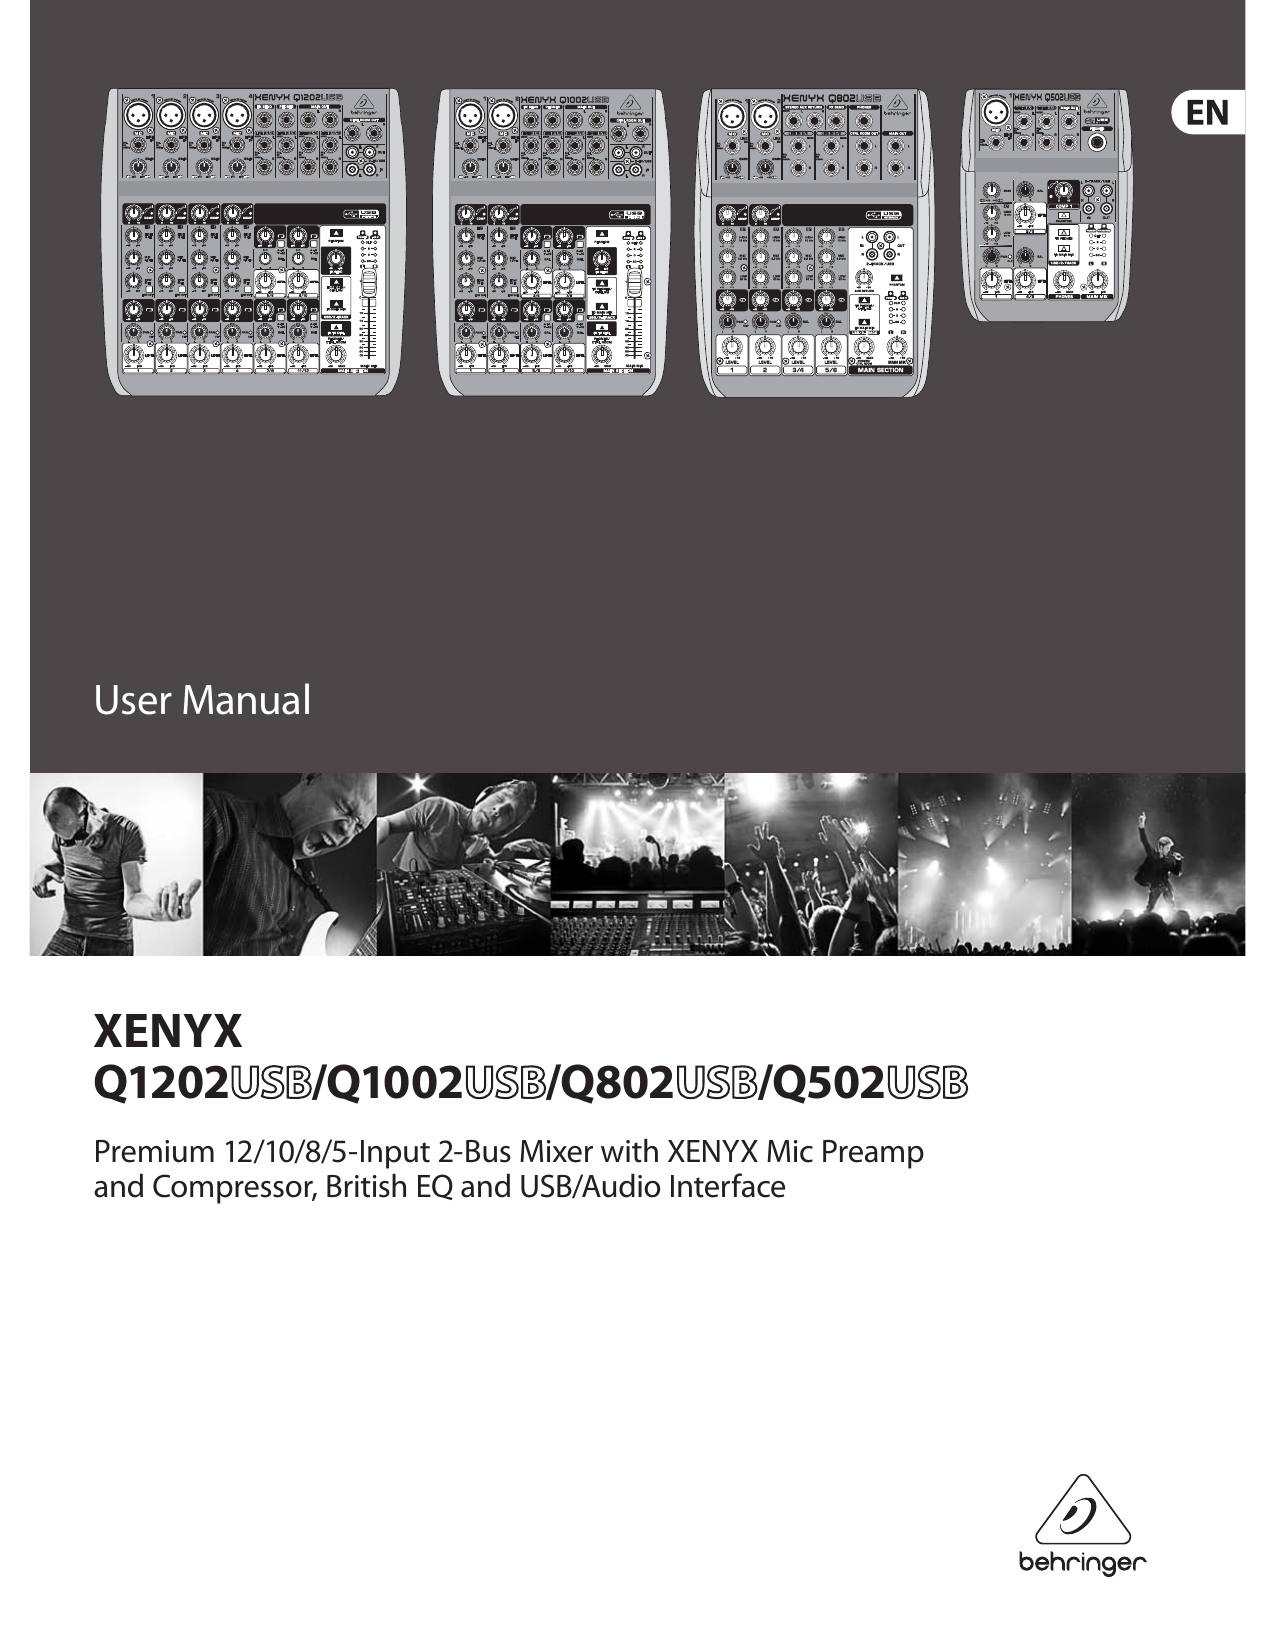 behringer xenyx q502usb main mix lights